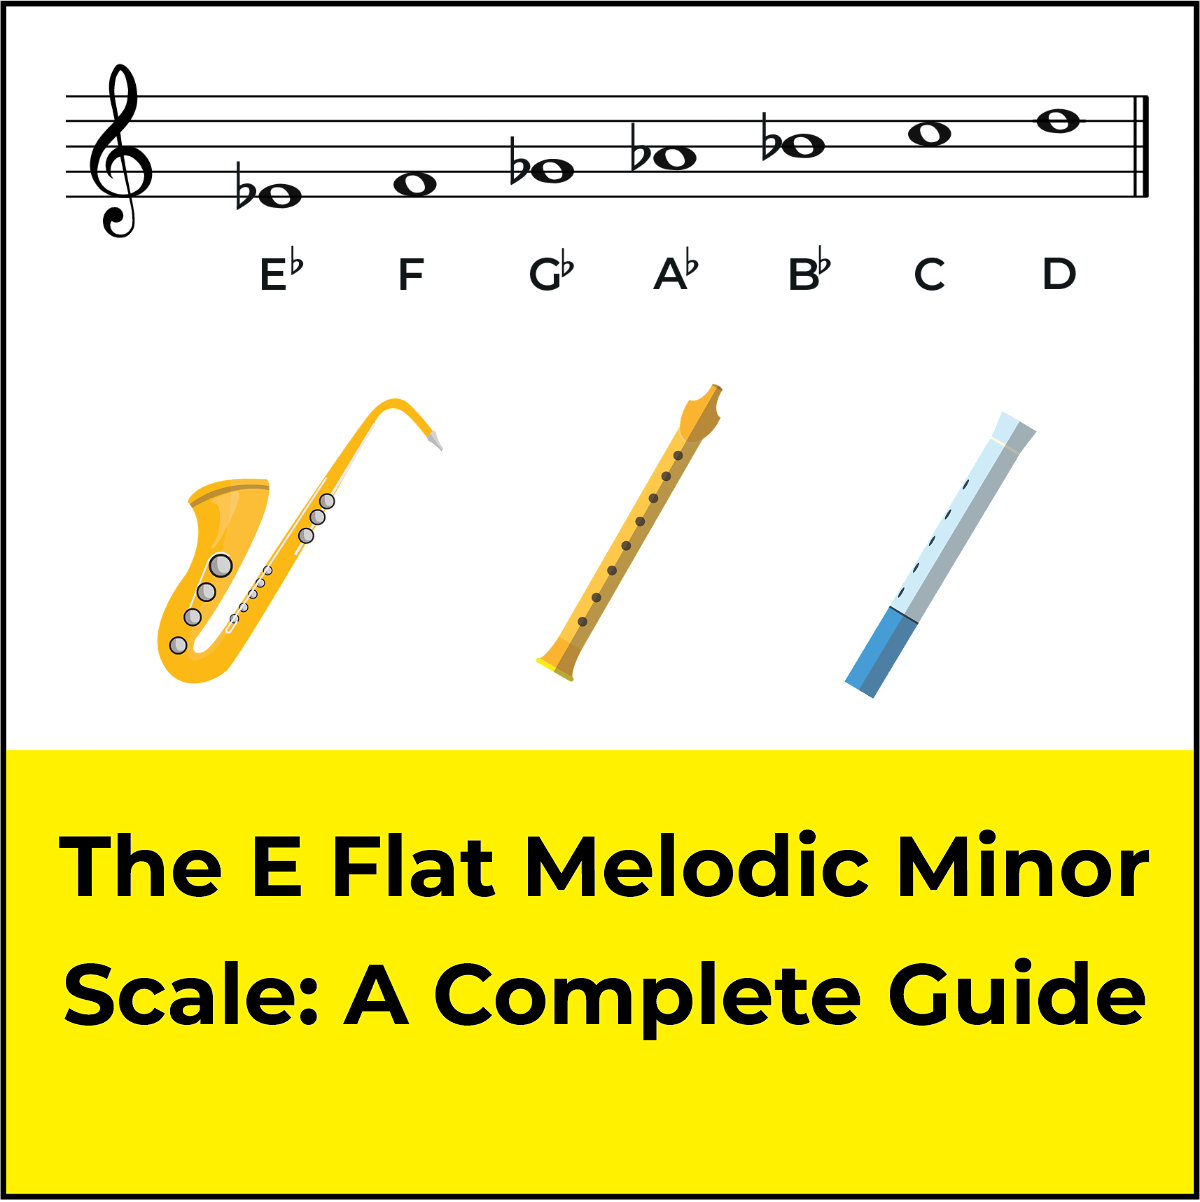 e flat melodic minor scale ascending and descending